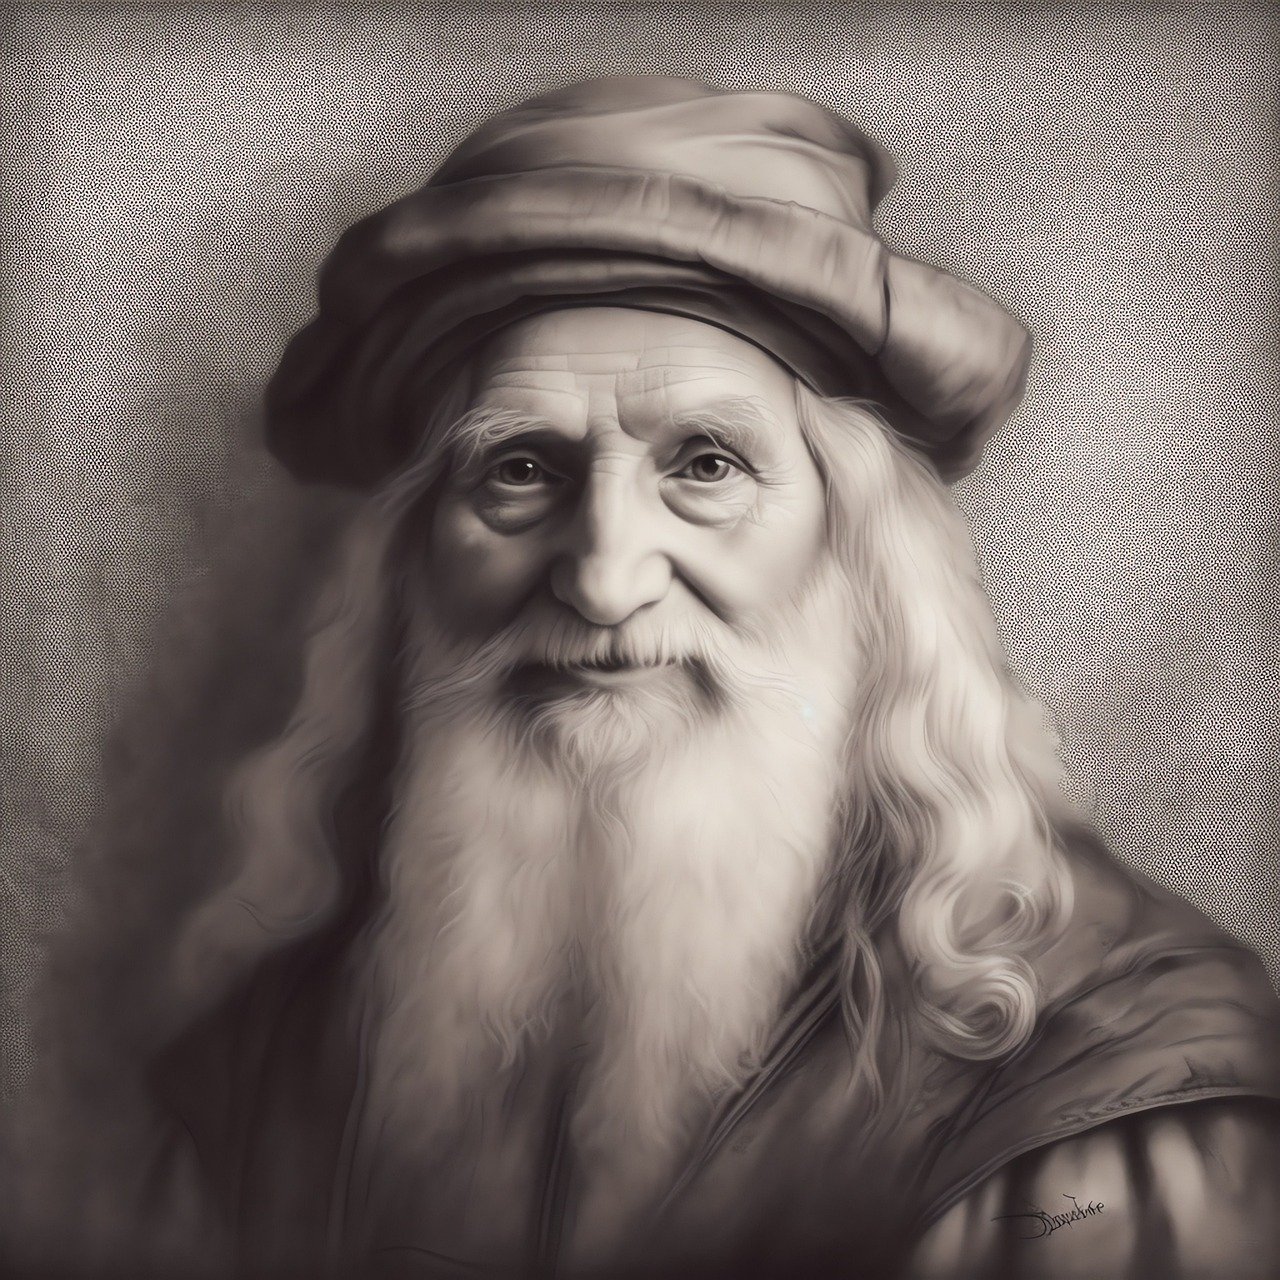 Scopri 7 Curiosità Affascinanti su Leonardo Da Vinci